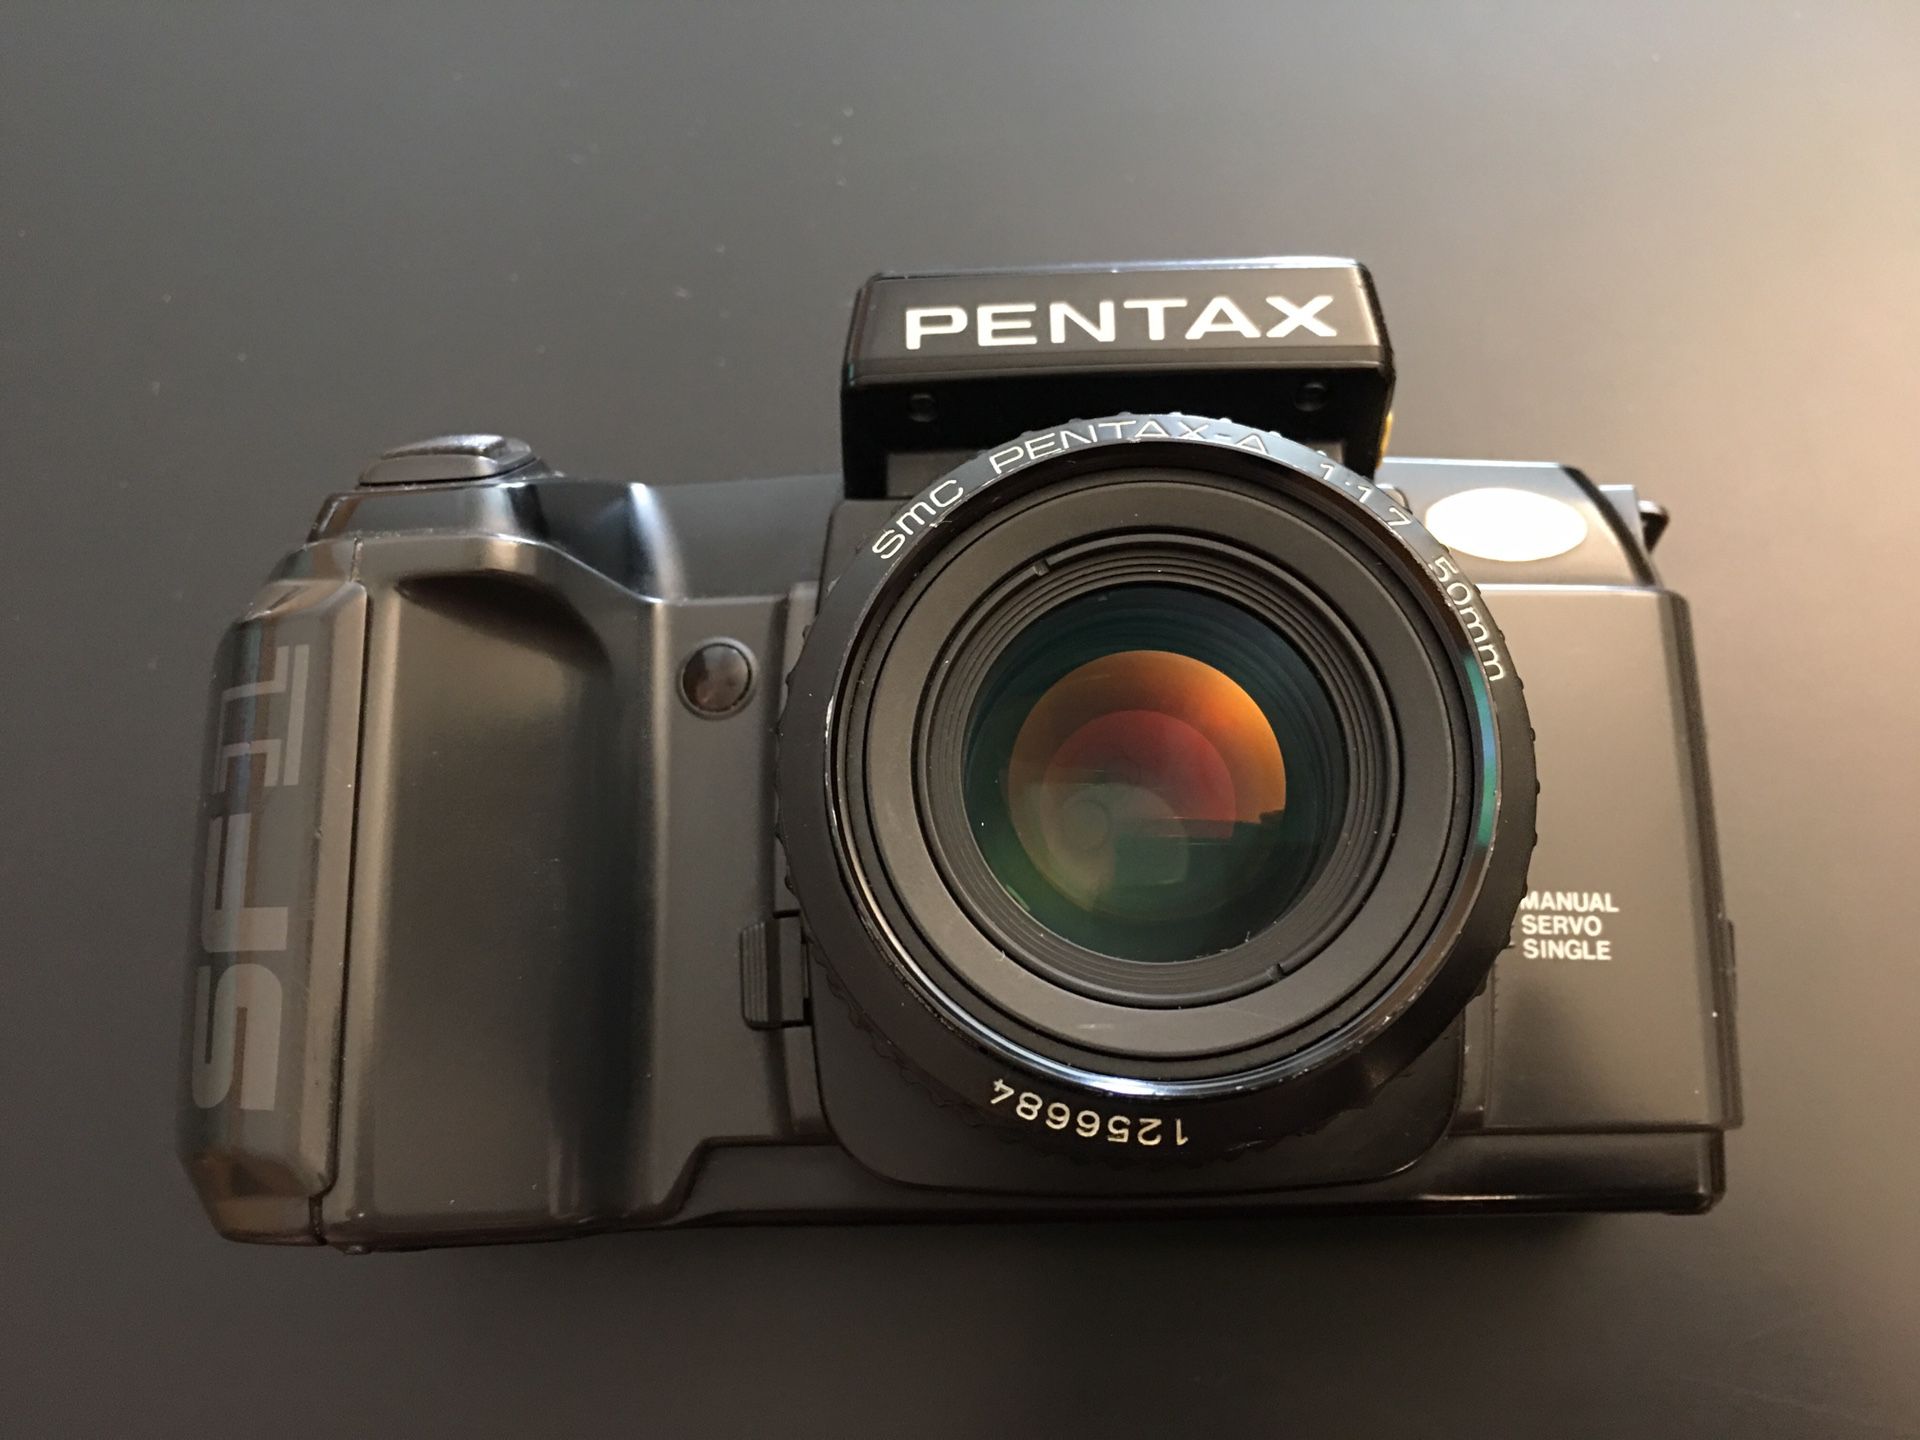 Pentax SF1 35mm SLR Film Camera with SMC Pentax-A 50mm f1.7 Prime Lens